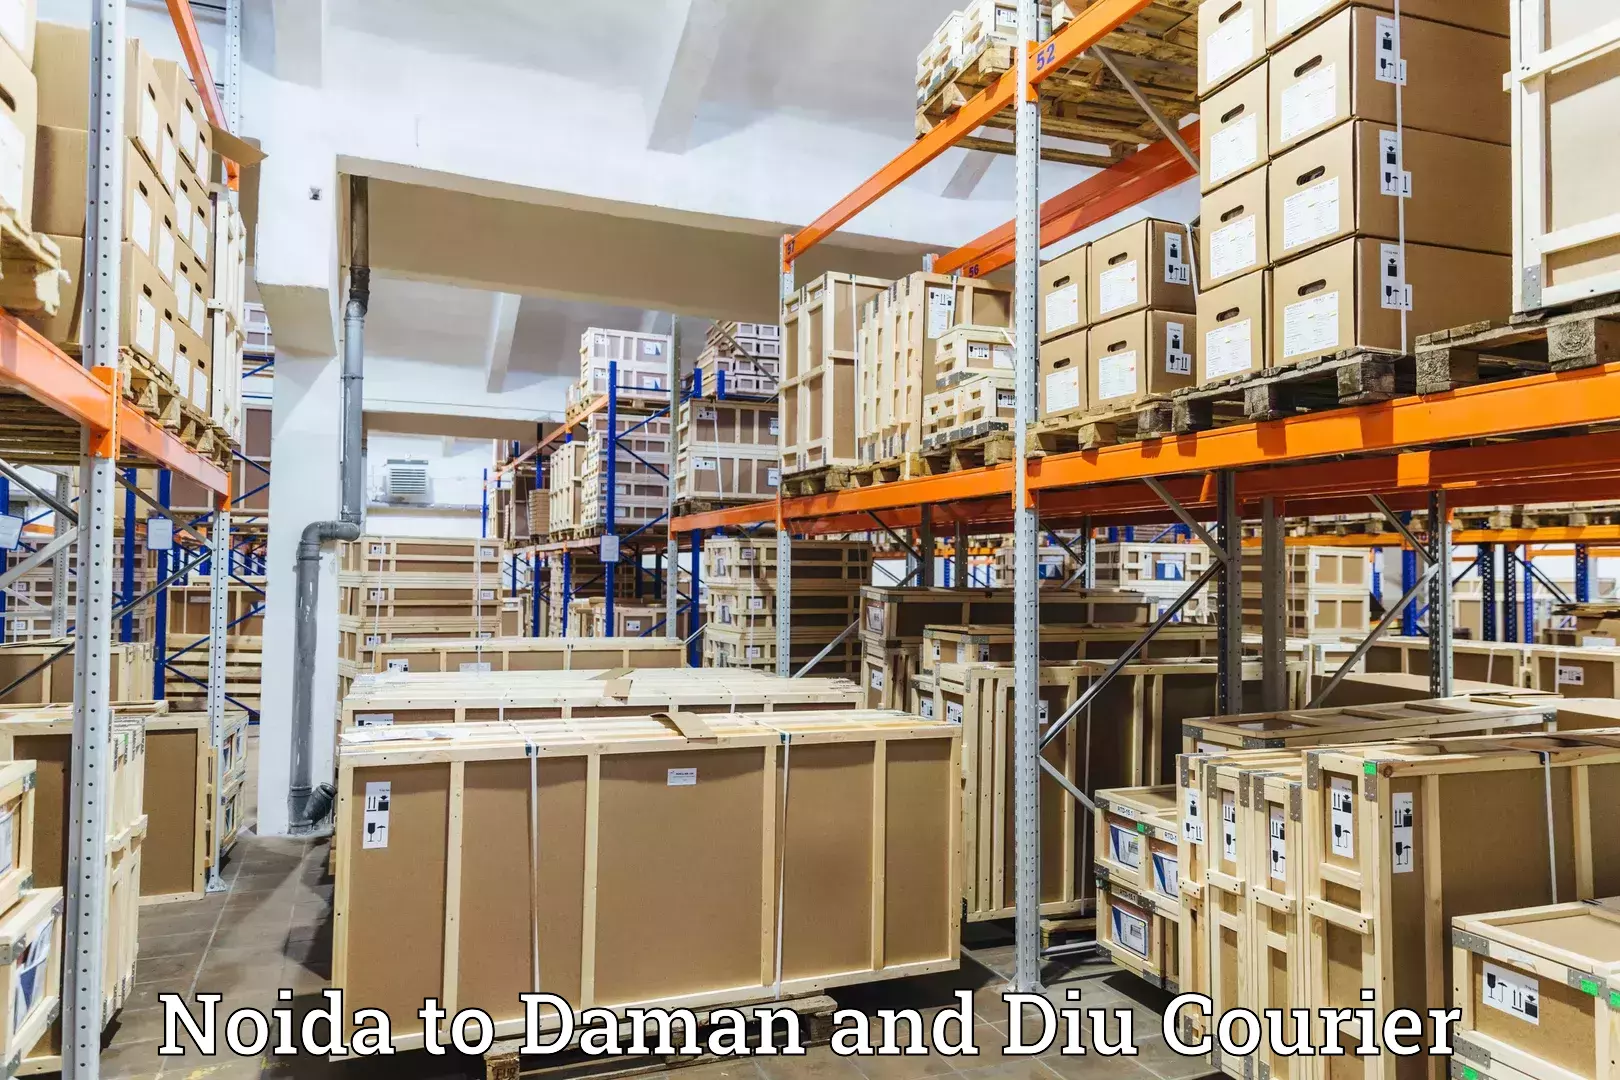 Courier service comparison Noida to Daman